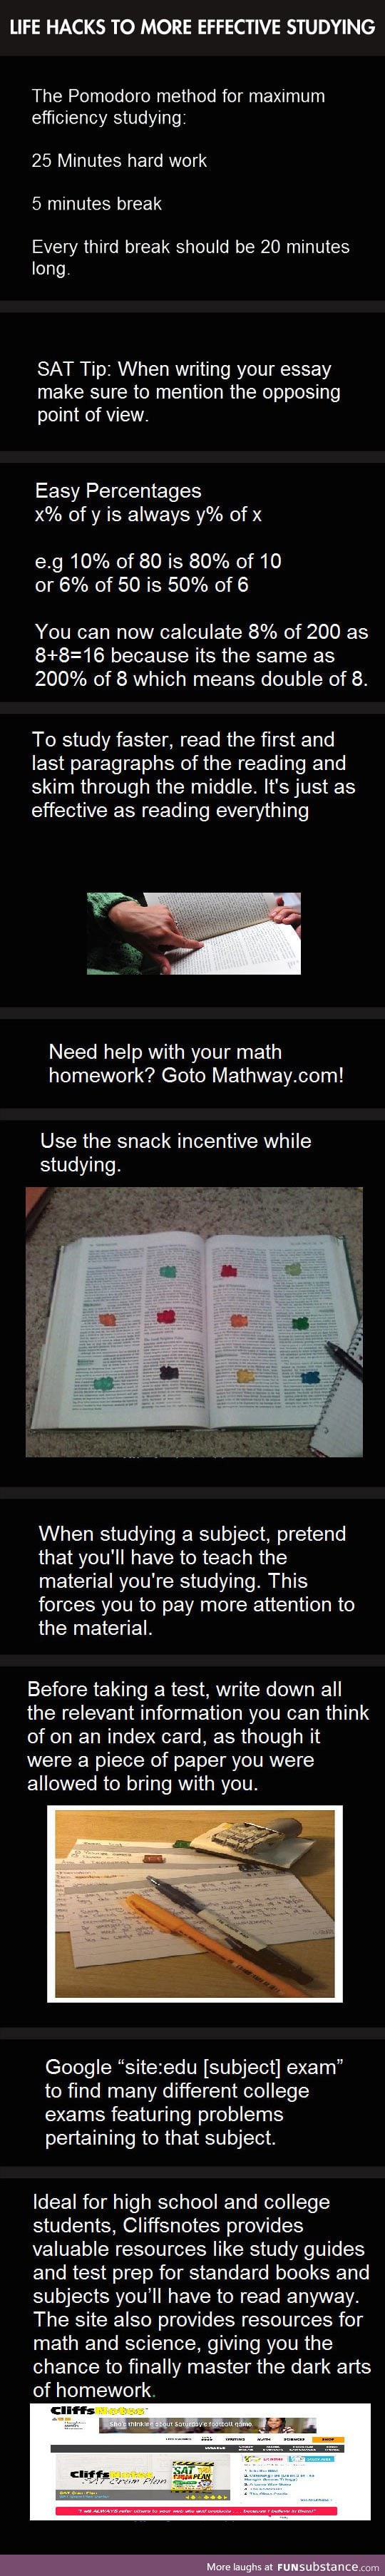 Hacks to effective studying